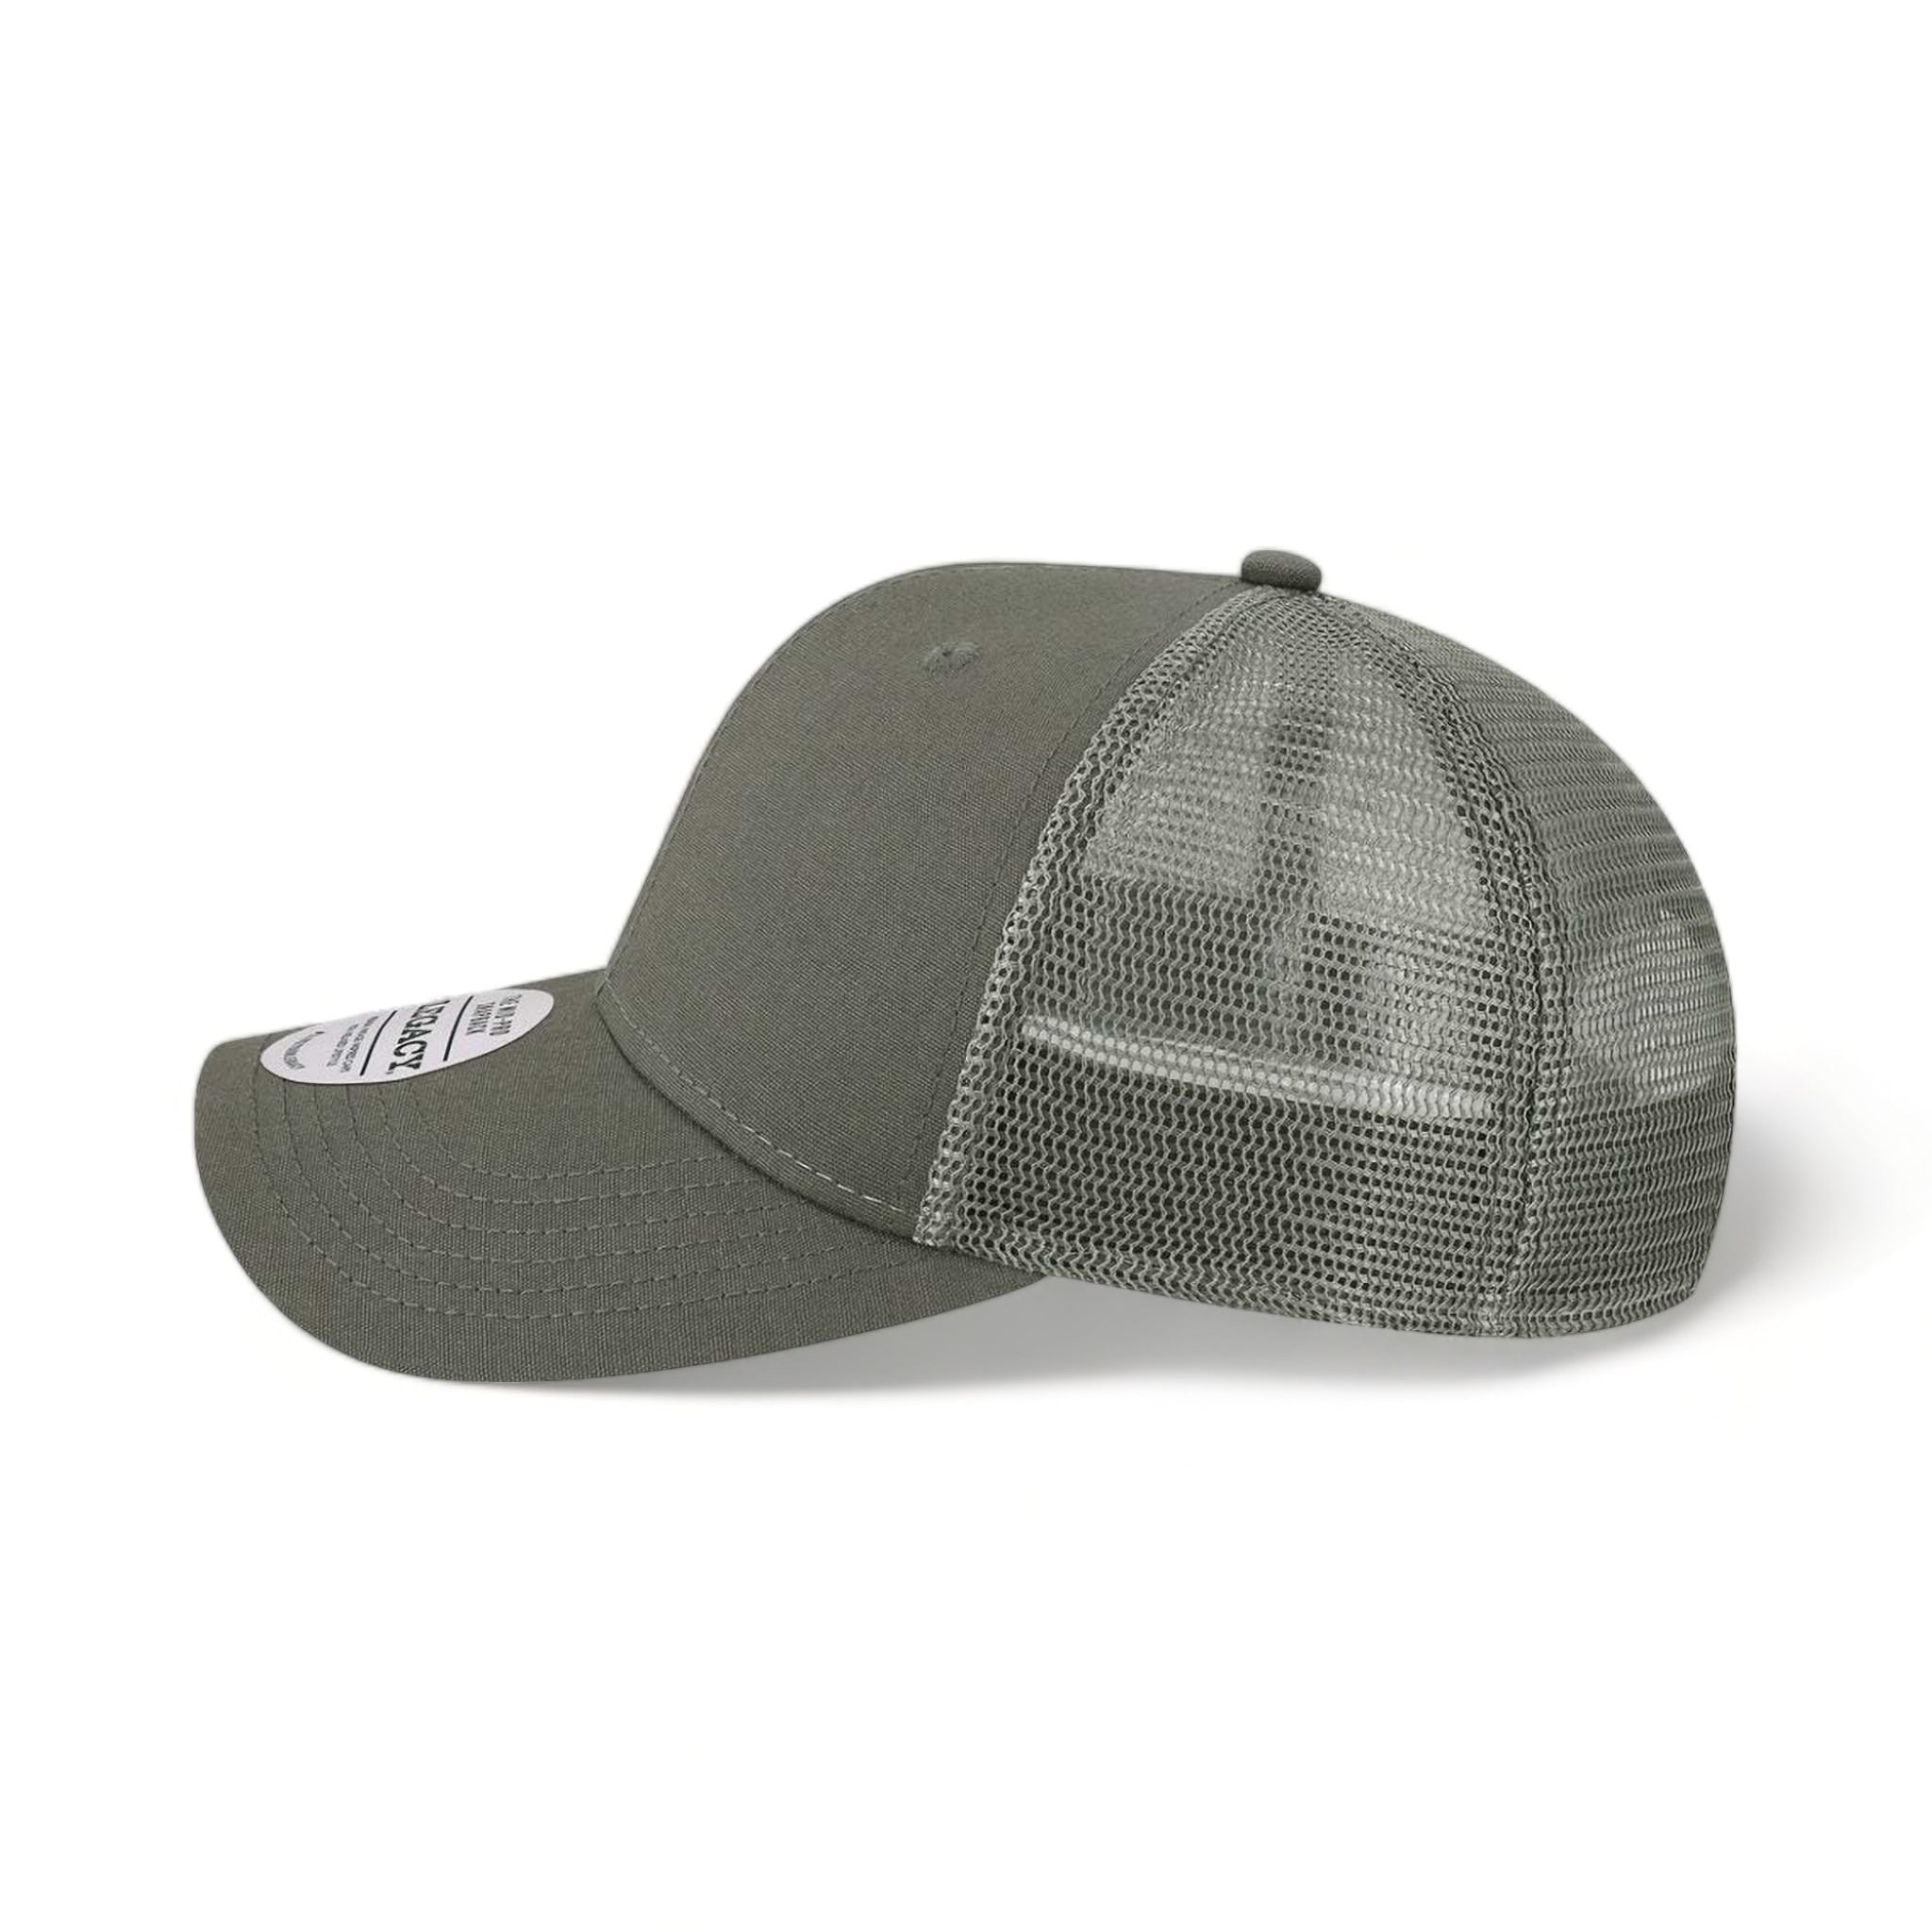 Side view of LEGACY MPS custom hat in dark grey and dark grey